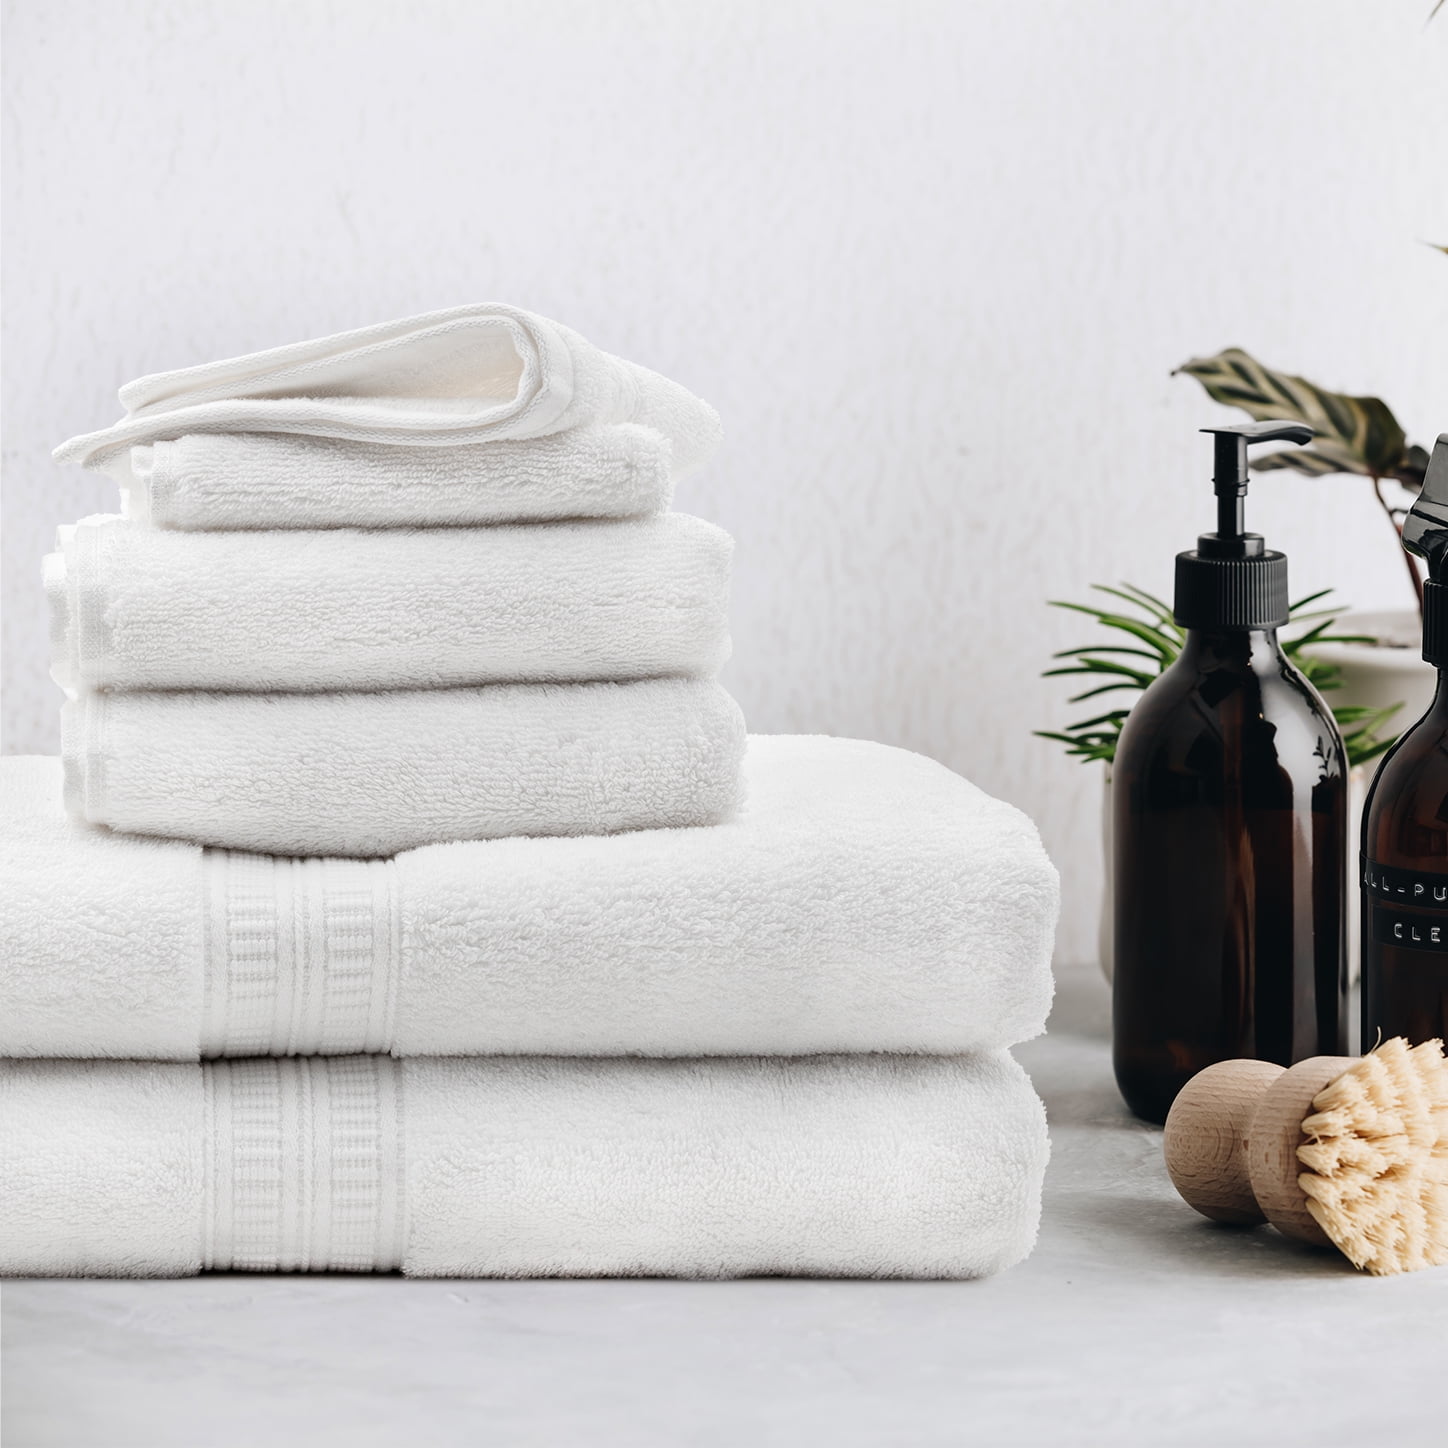 Pinzon Luxury Certified Organic Hand Towels, 6-Pack